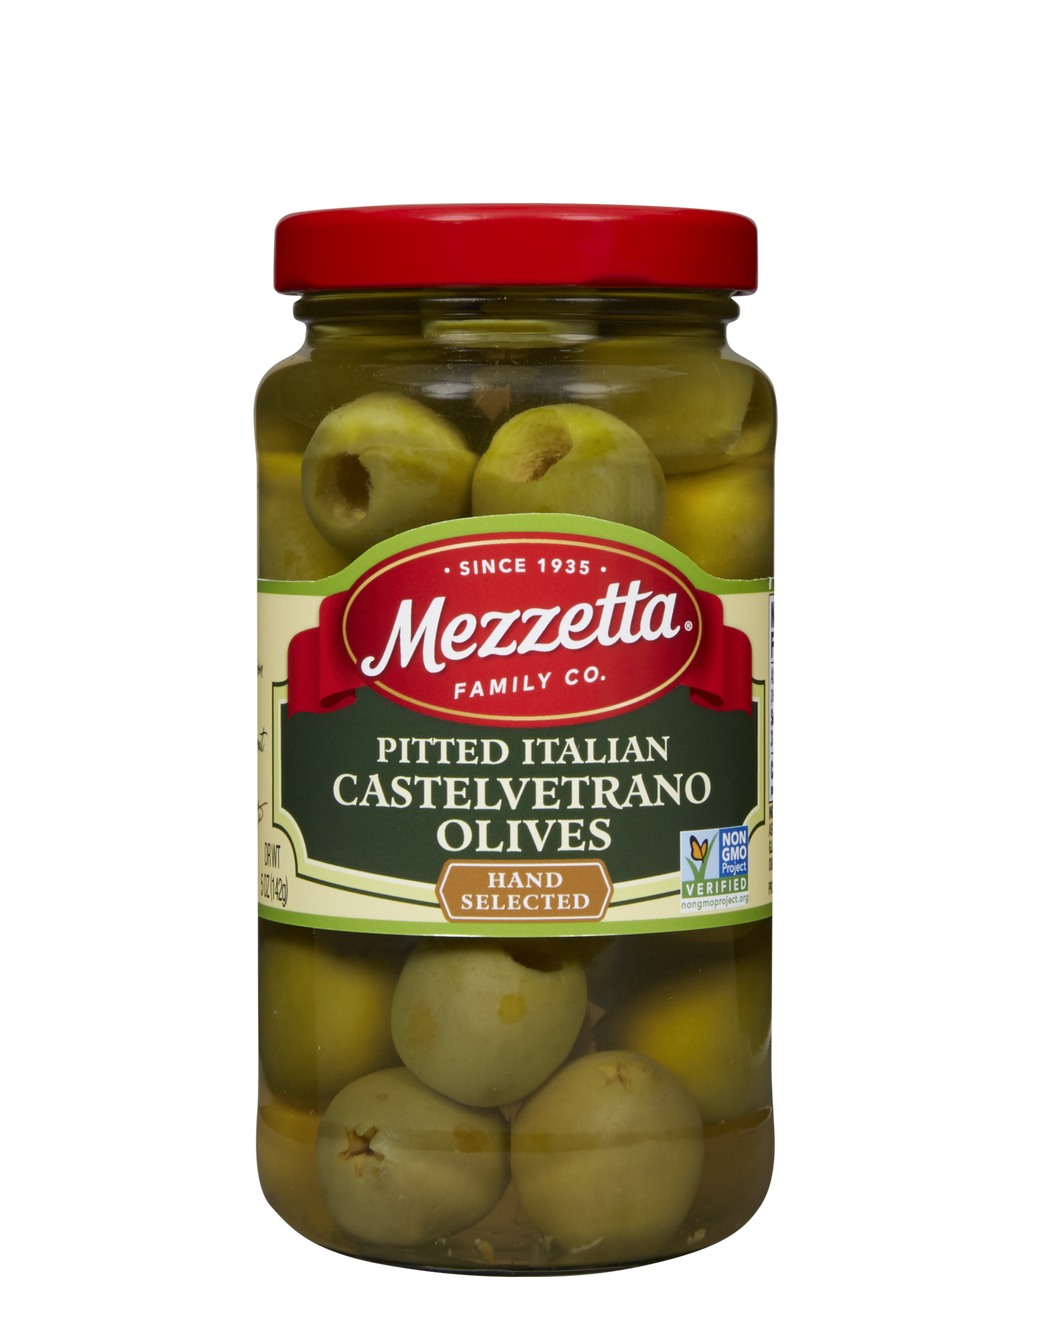 Pitted Italian Castelvetrano Olives